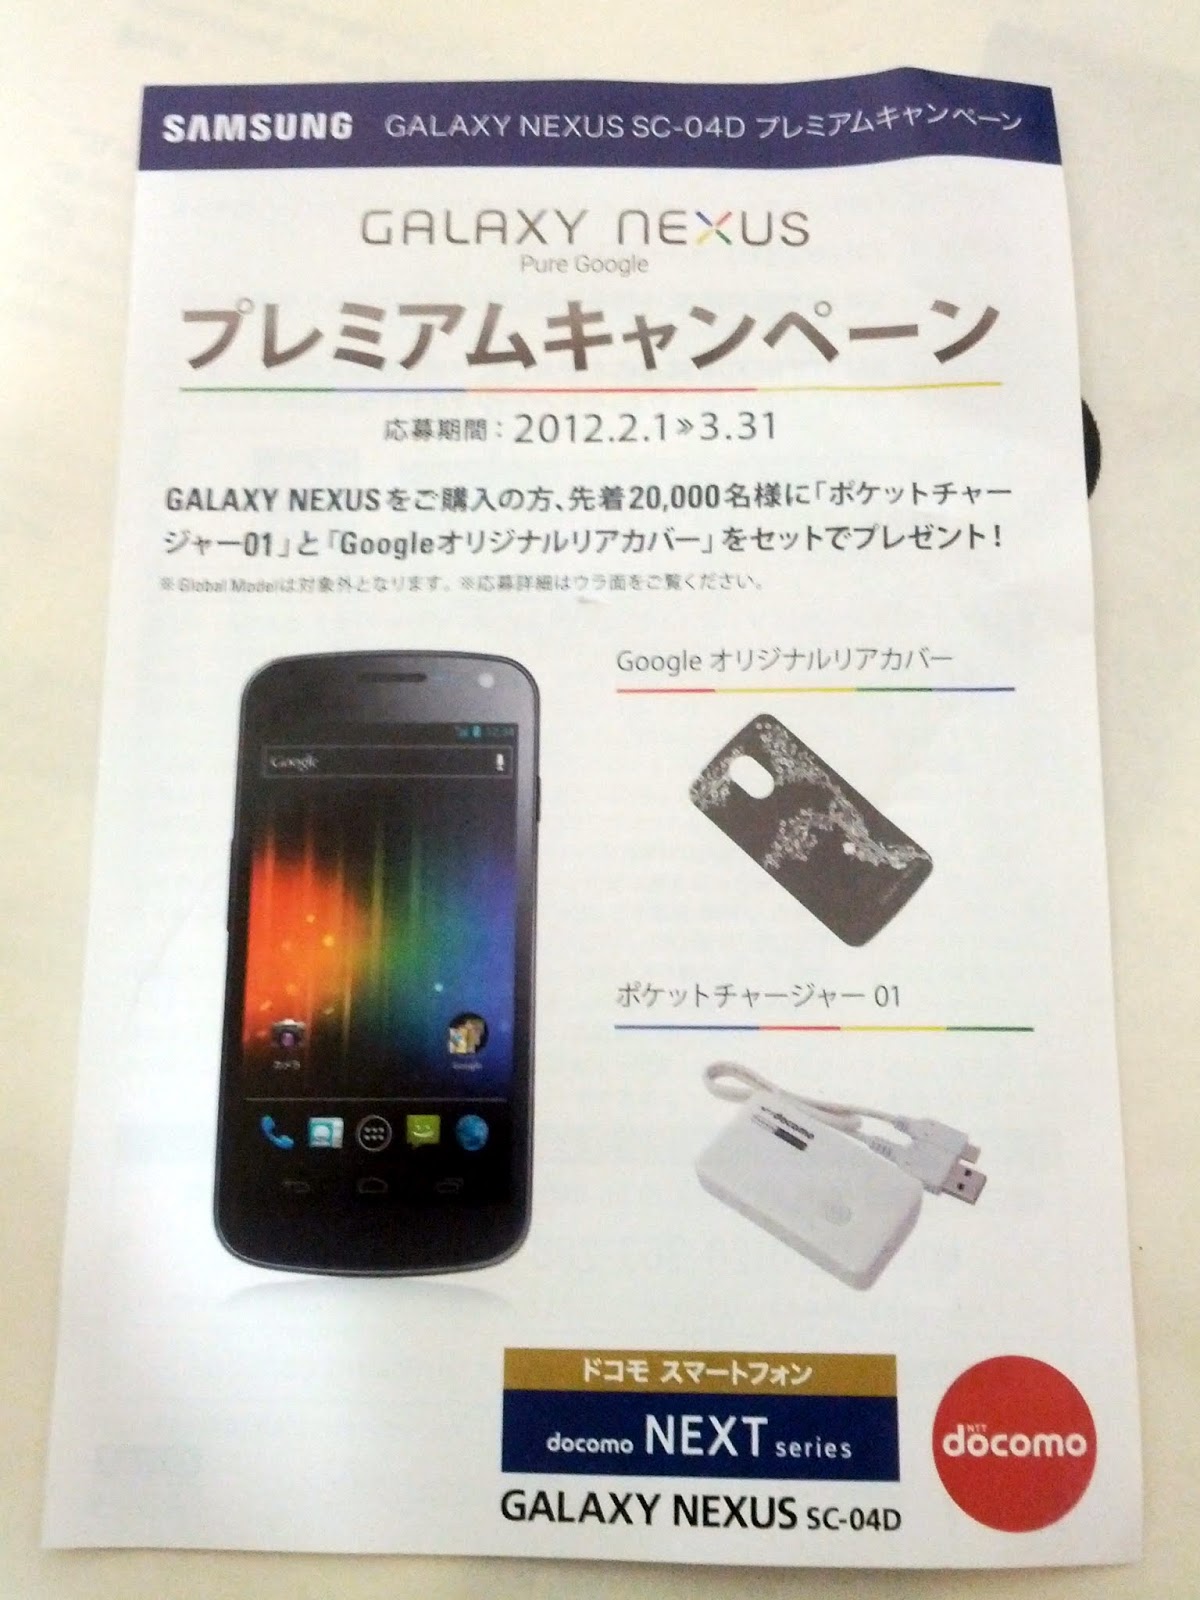 Japan Mobile Tech February 12